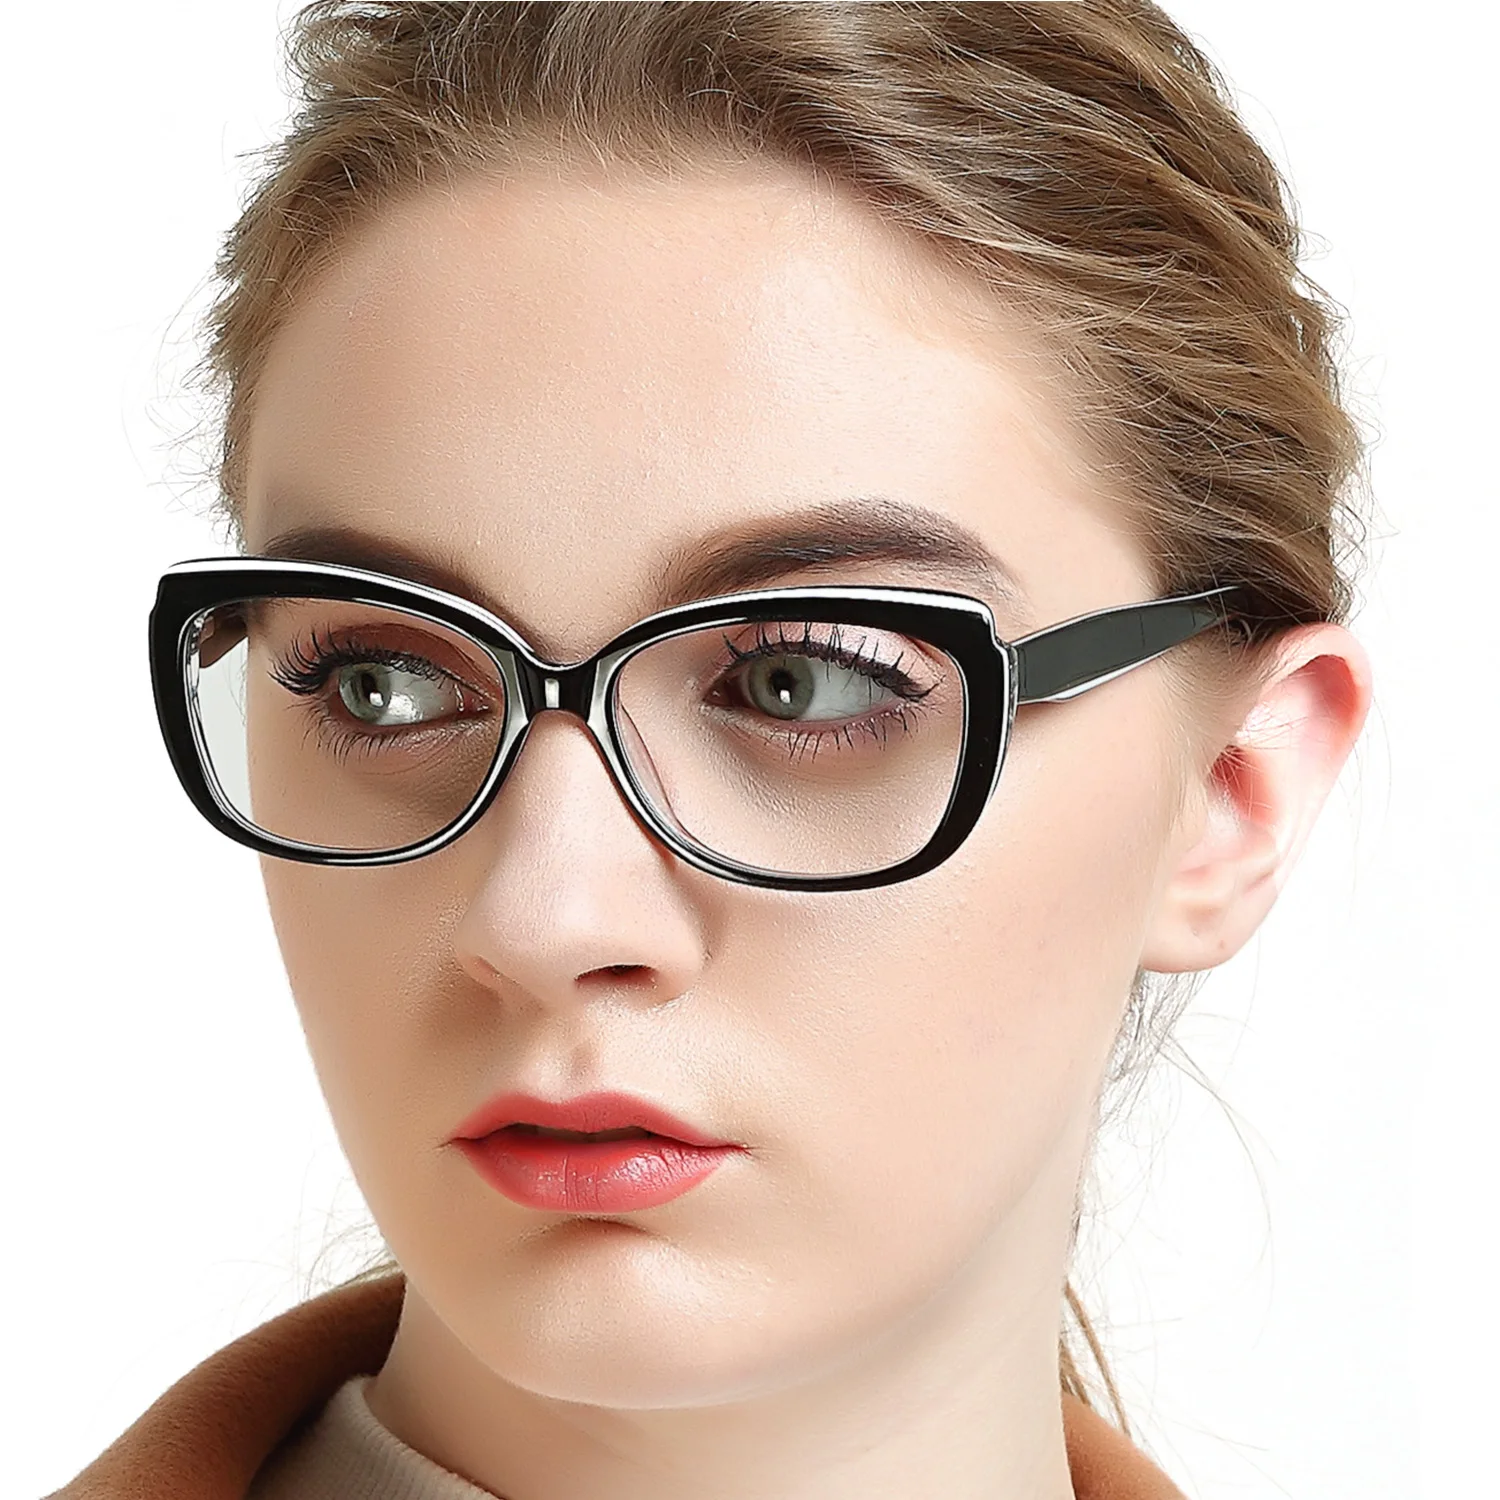 

OCCI CHIARI optical Glasses Women Prescription Eyewear Small Cat Eyes Eyeglasses Frames Clear Lens Fashion Myopia Spectacles